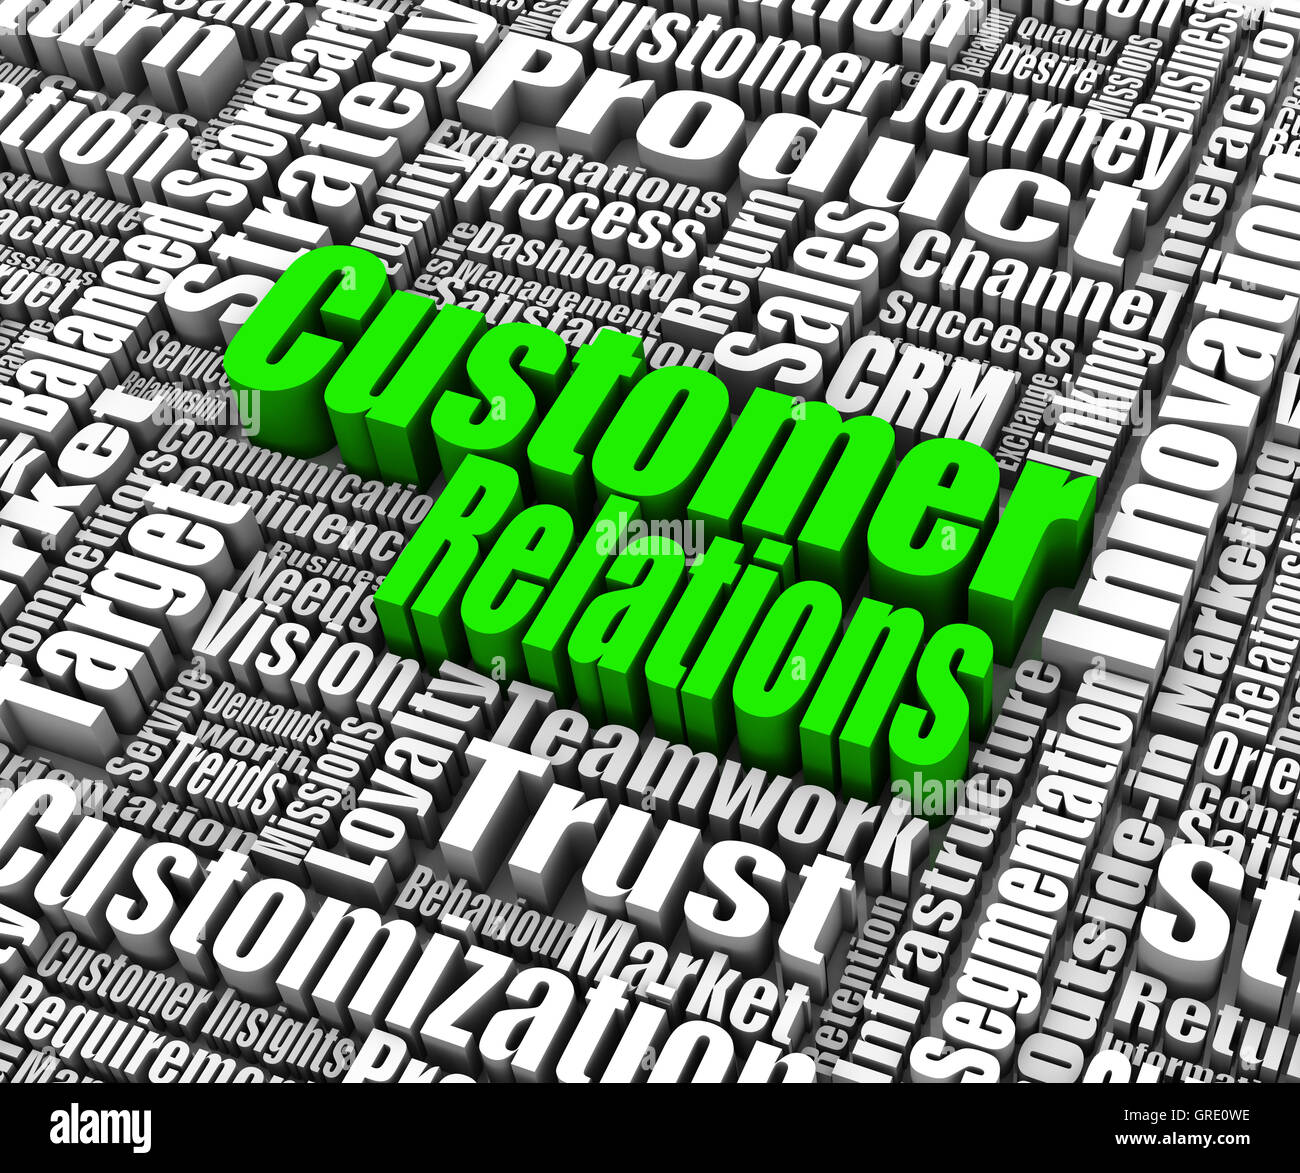 Customer Relations Stock Photo